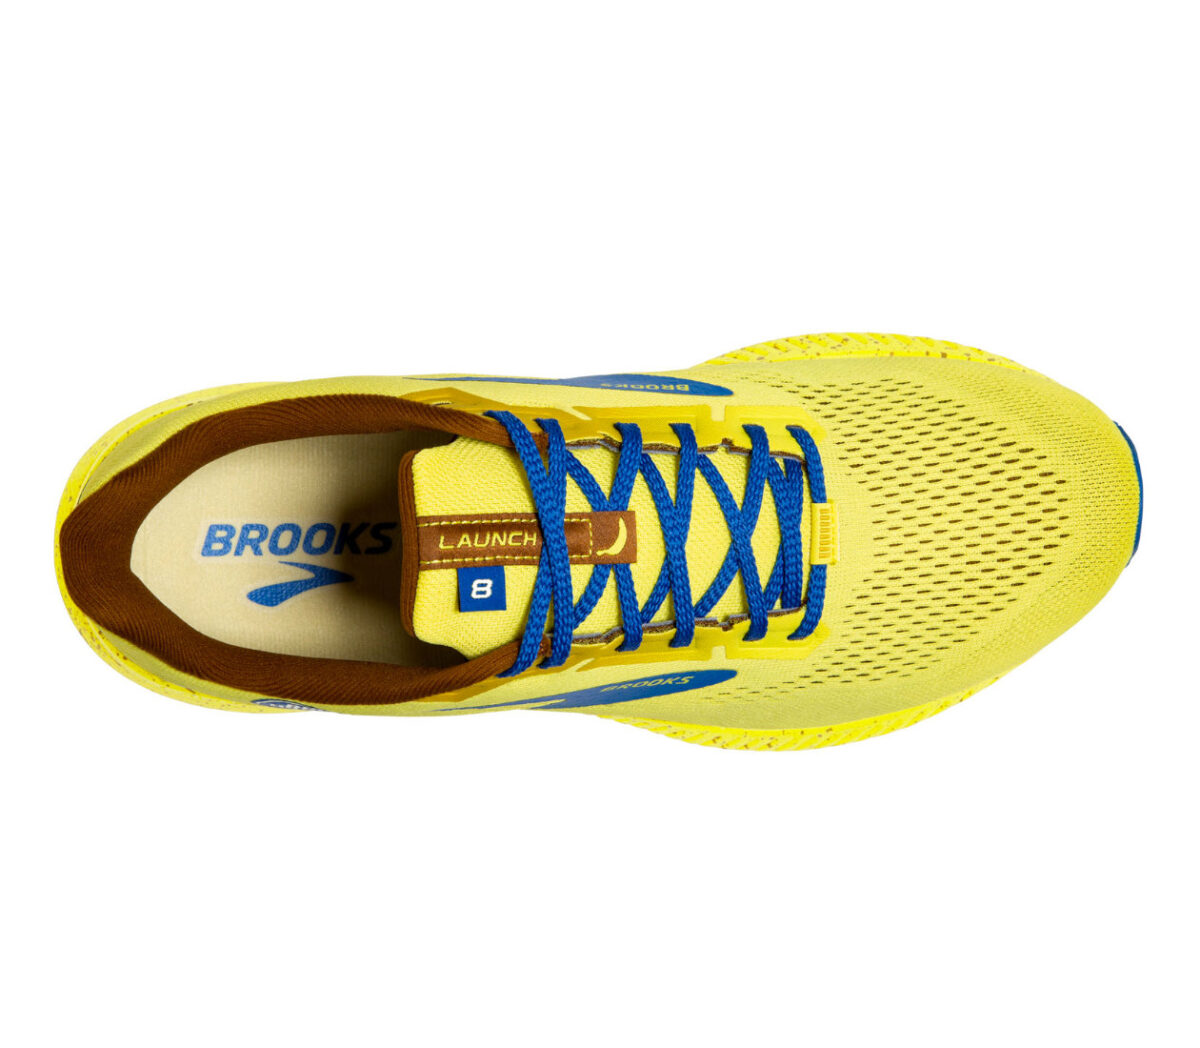 scarpa running brooks launch 8 donna gialla e blu vista da sopra